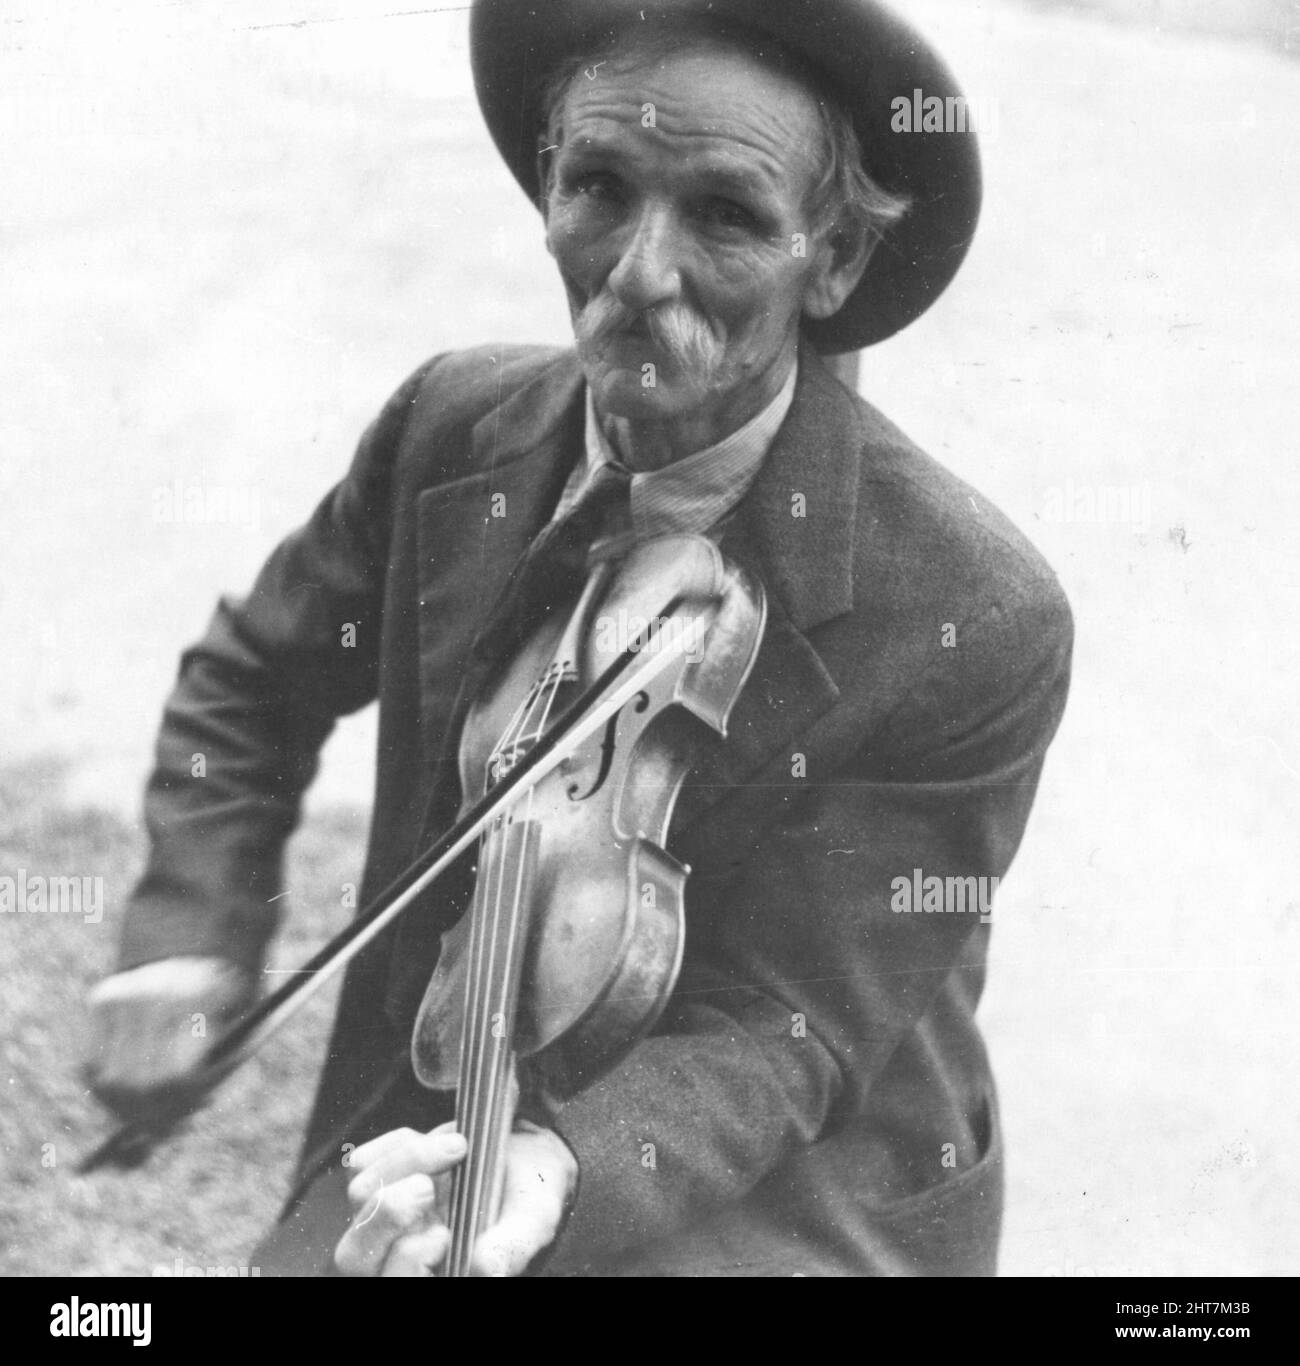 Ben Shahn - Fiddlin Bill Henseley, Mountain Fiddler, Asheville, North Carolina, USA - 1937 Stock Photo